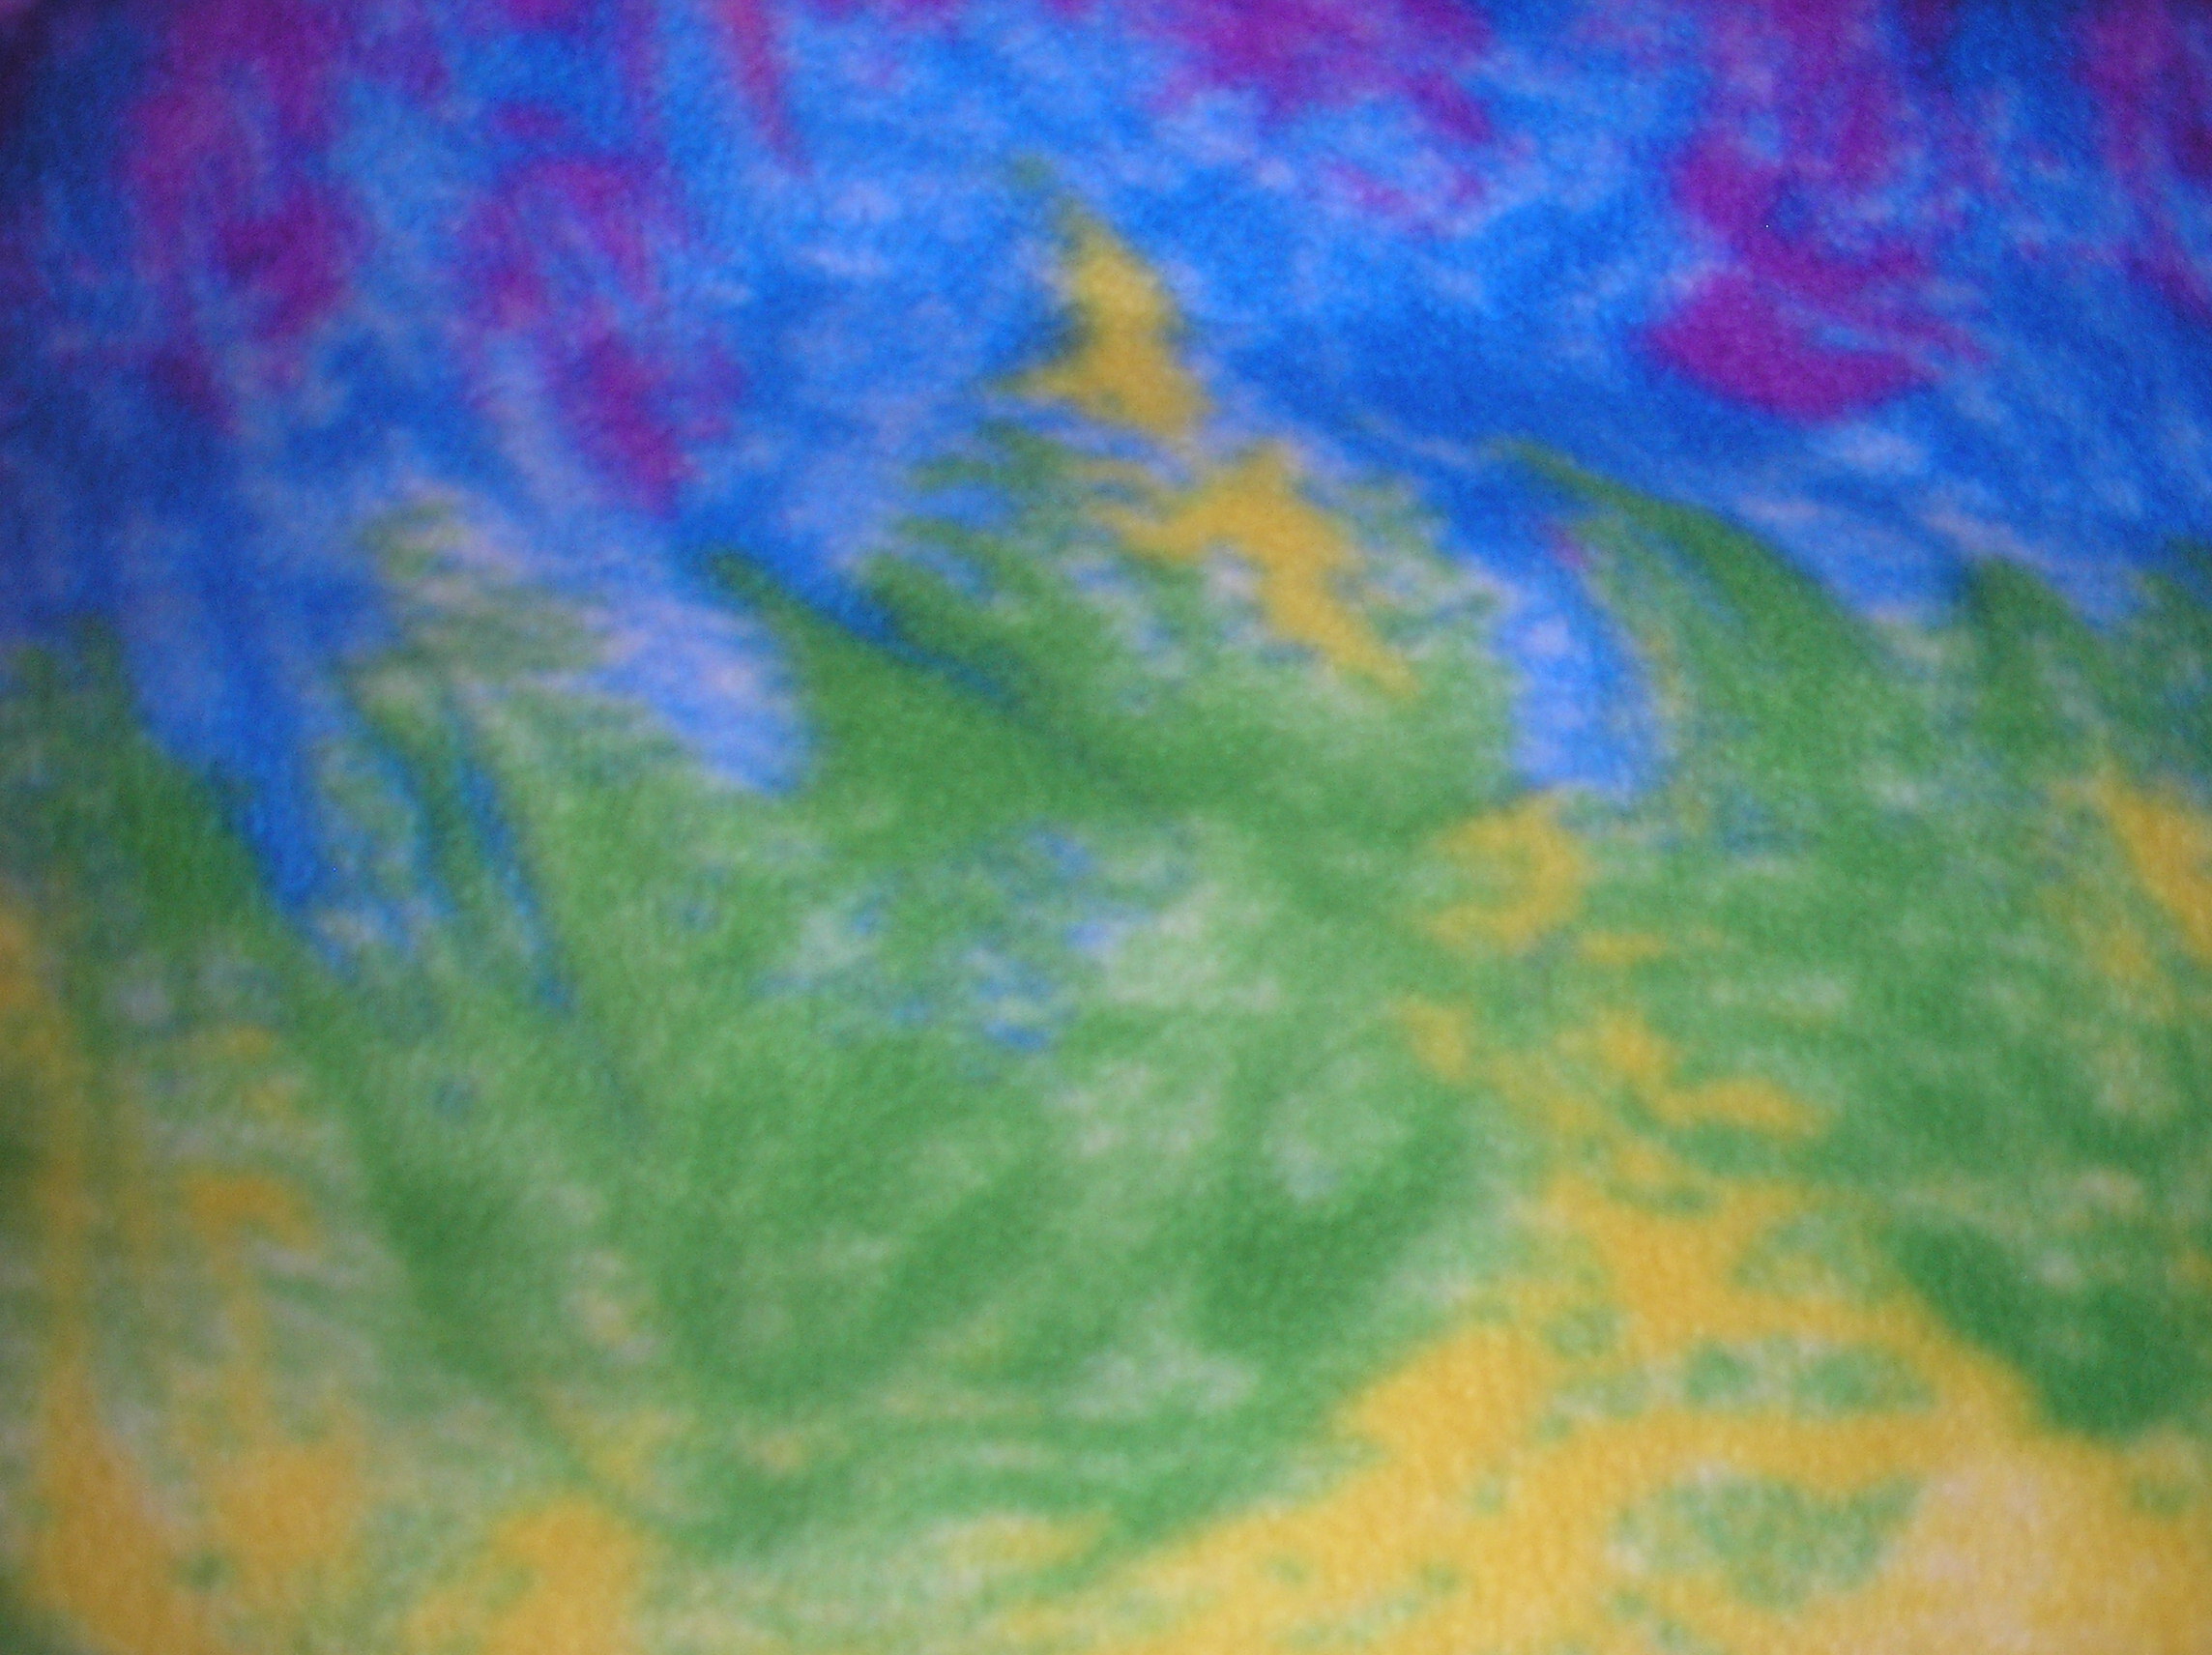 Tye dye in bright colors